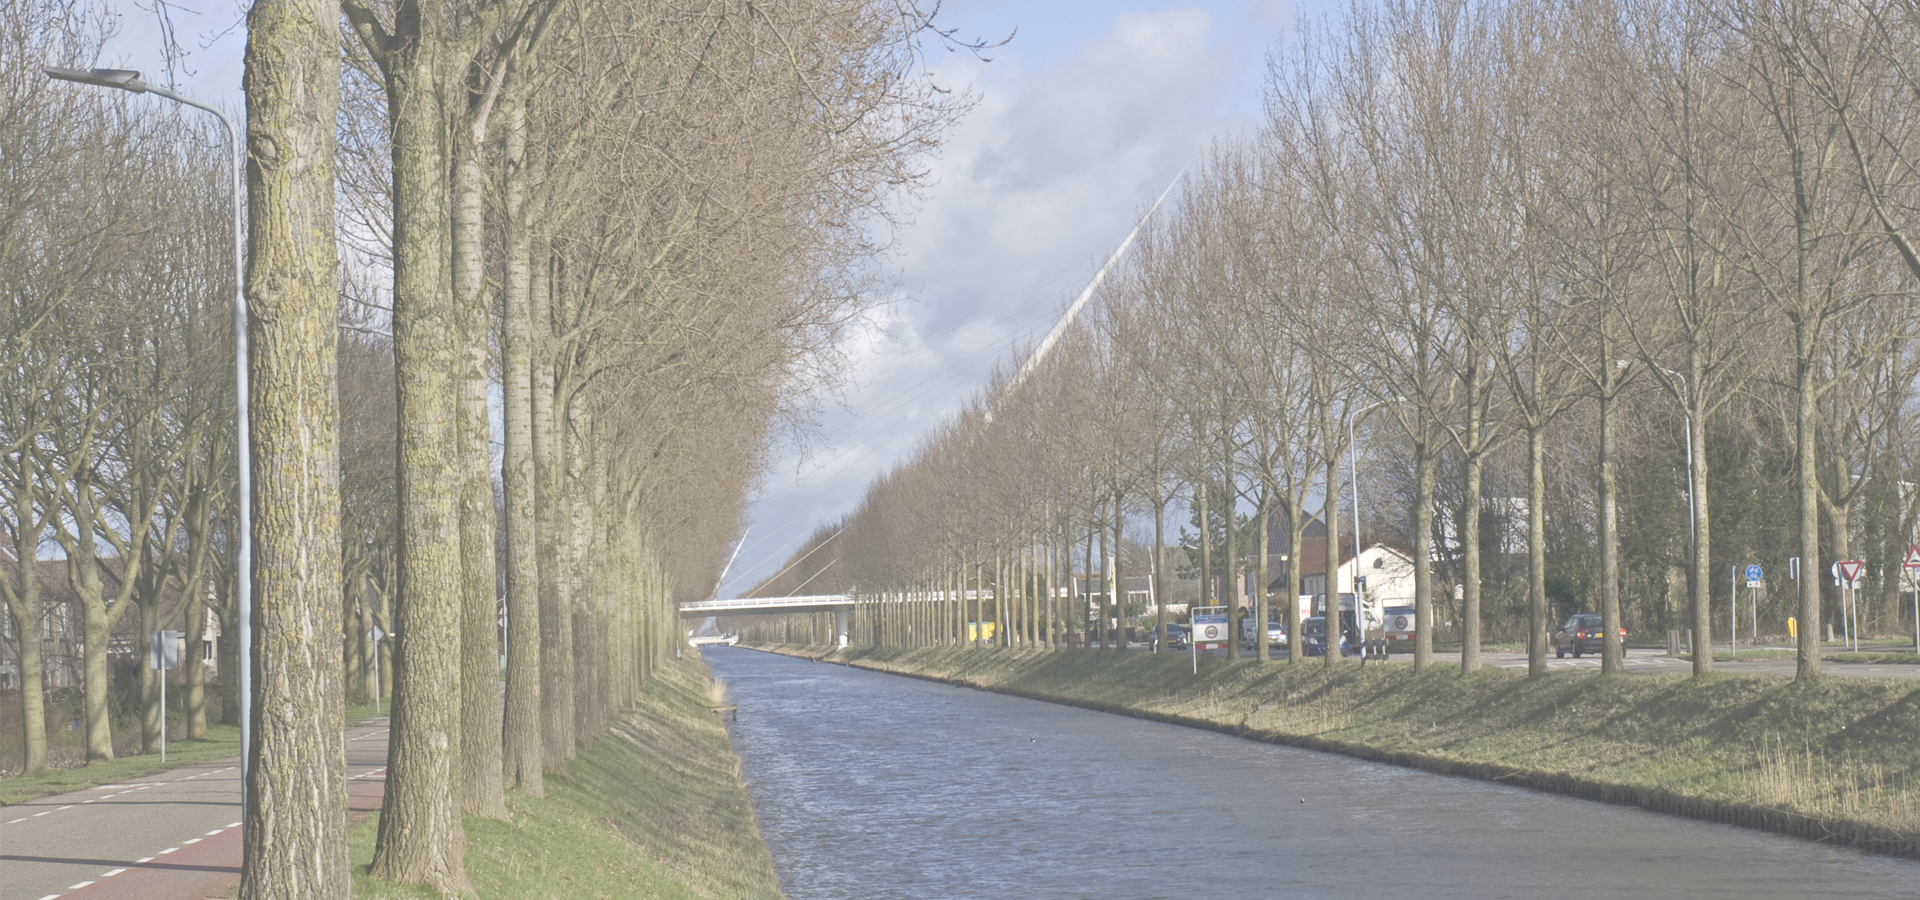 <b>Nieuw-Vennep, North Holland, Netherlands</b>